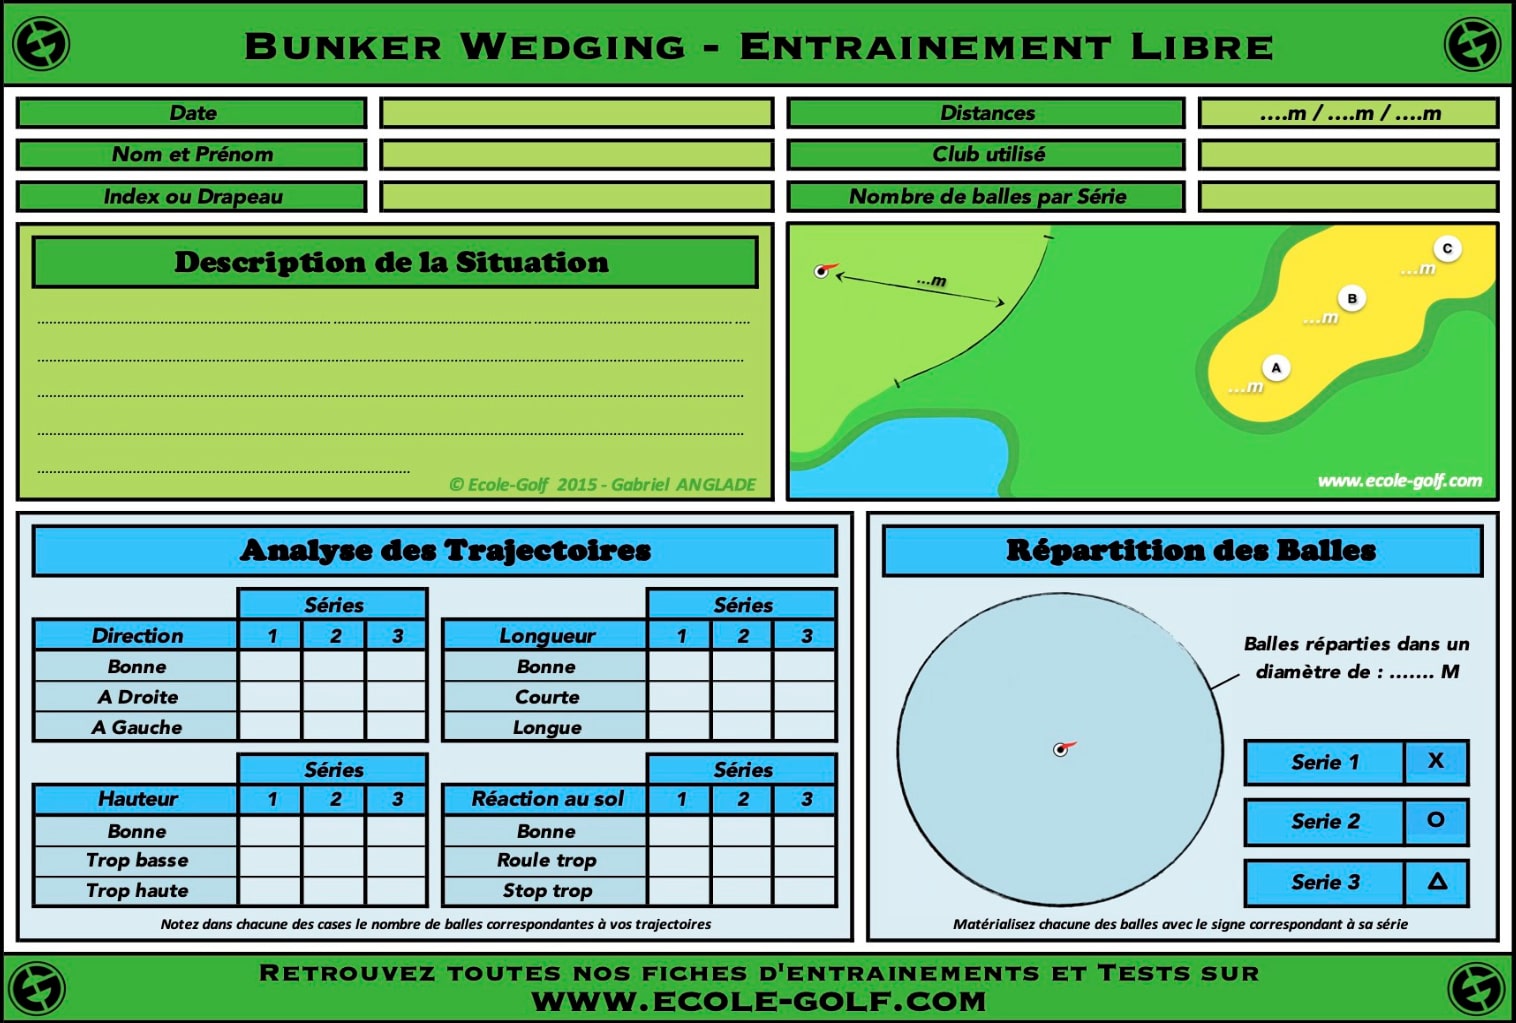 Bunker Wedging - Entrainement Libre